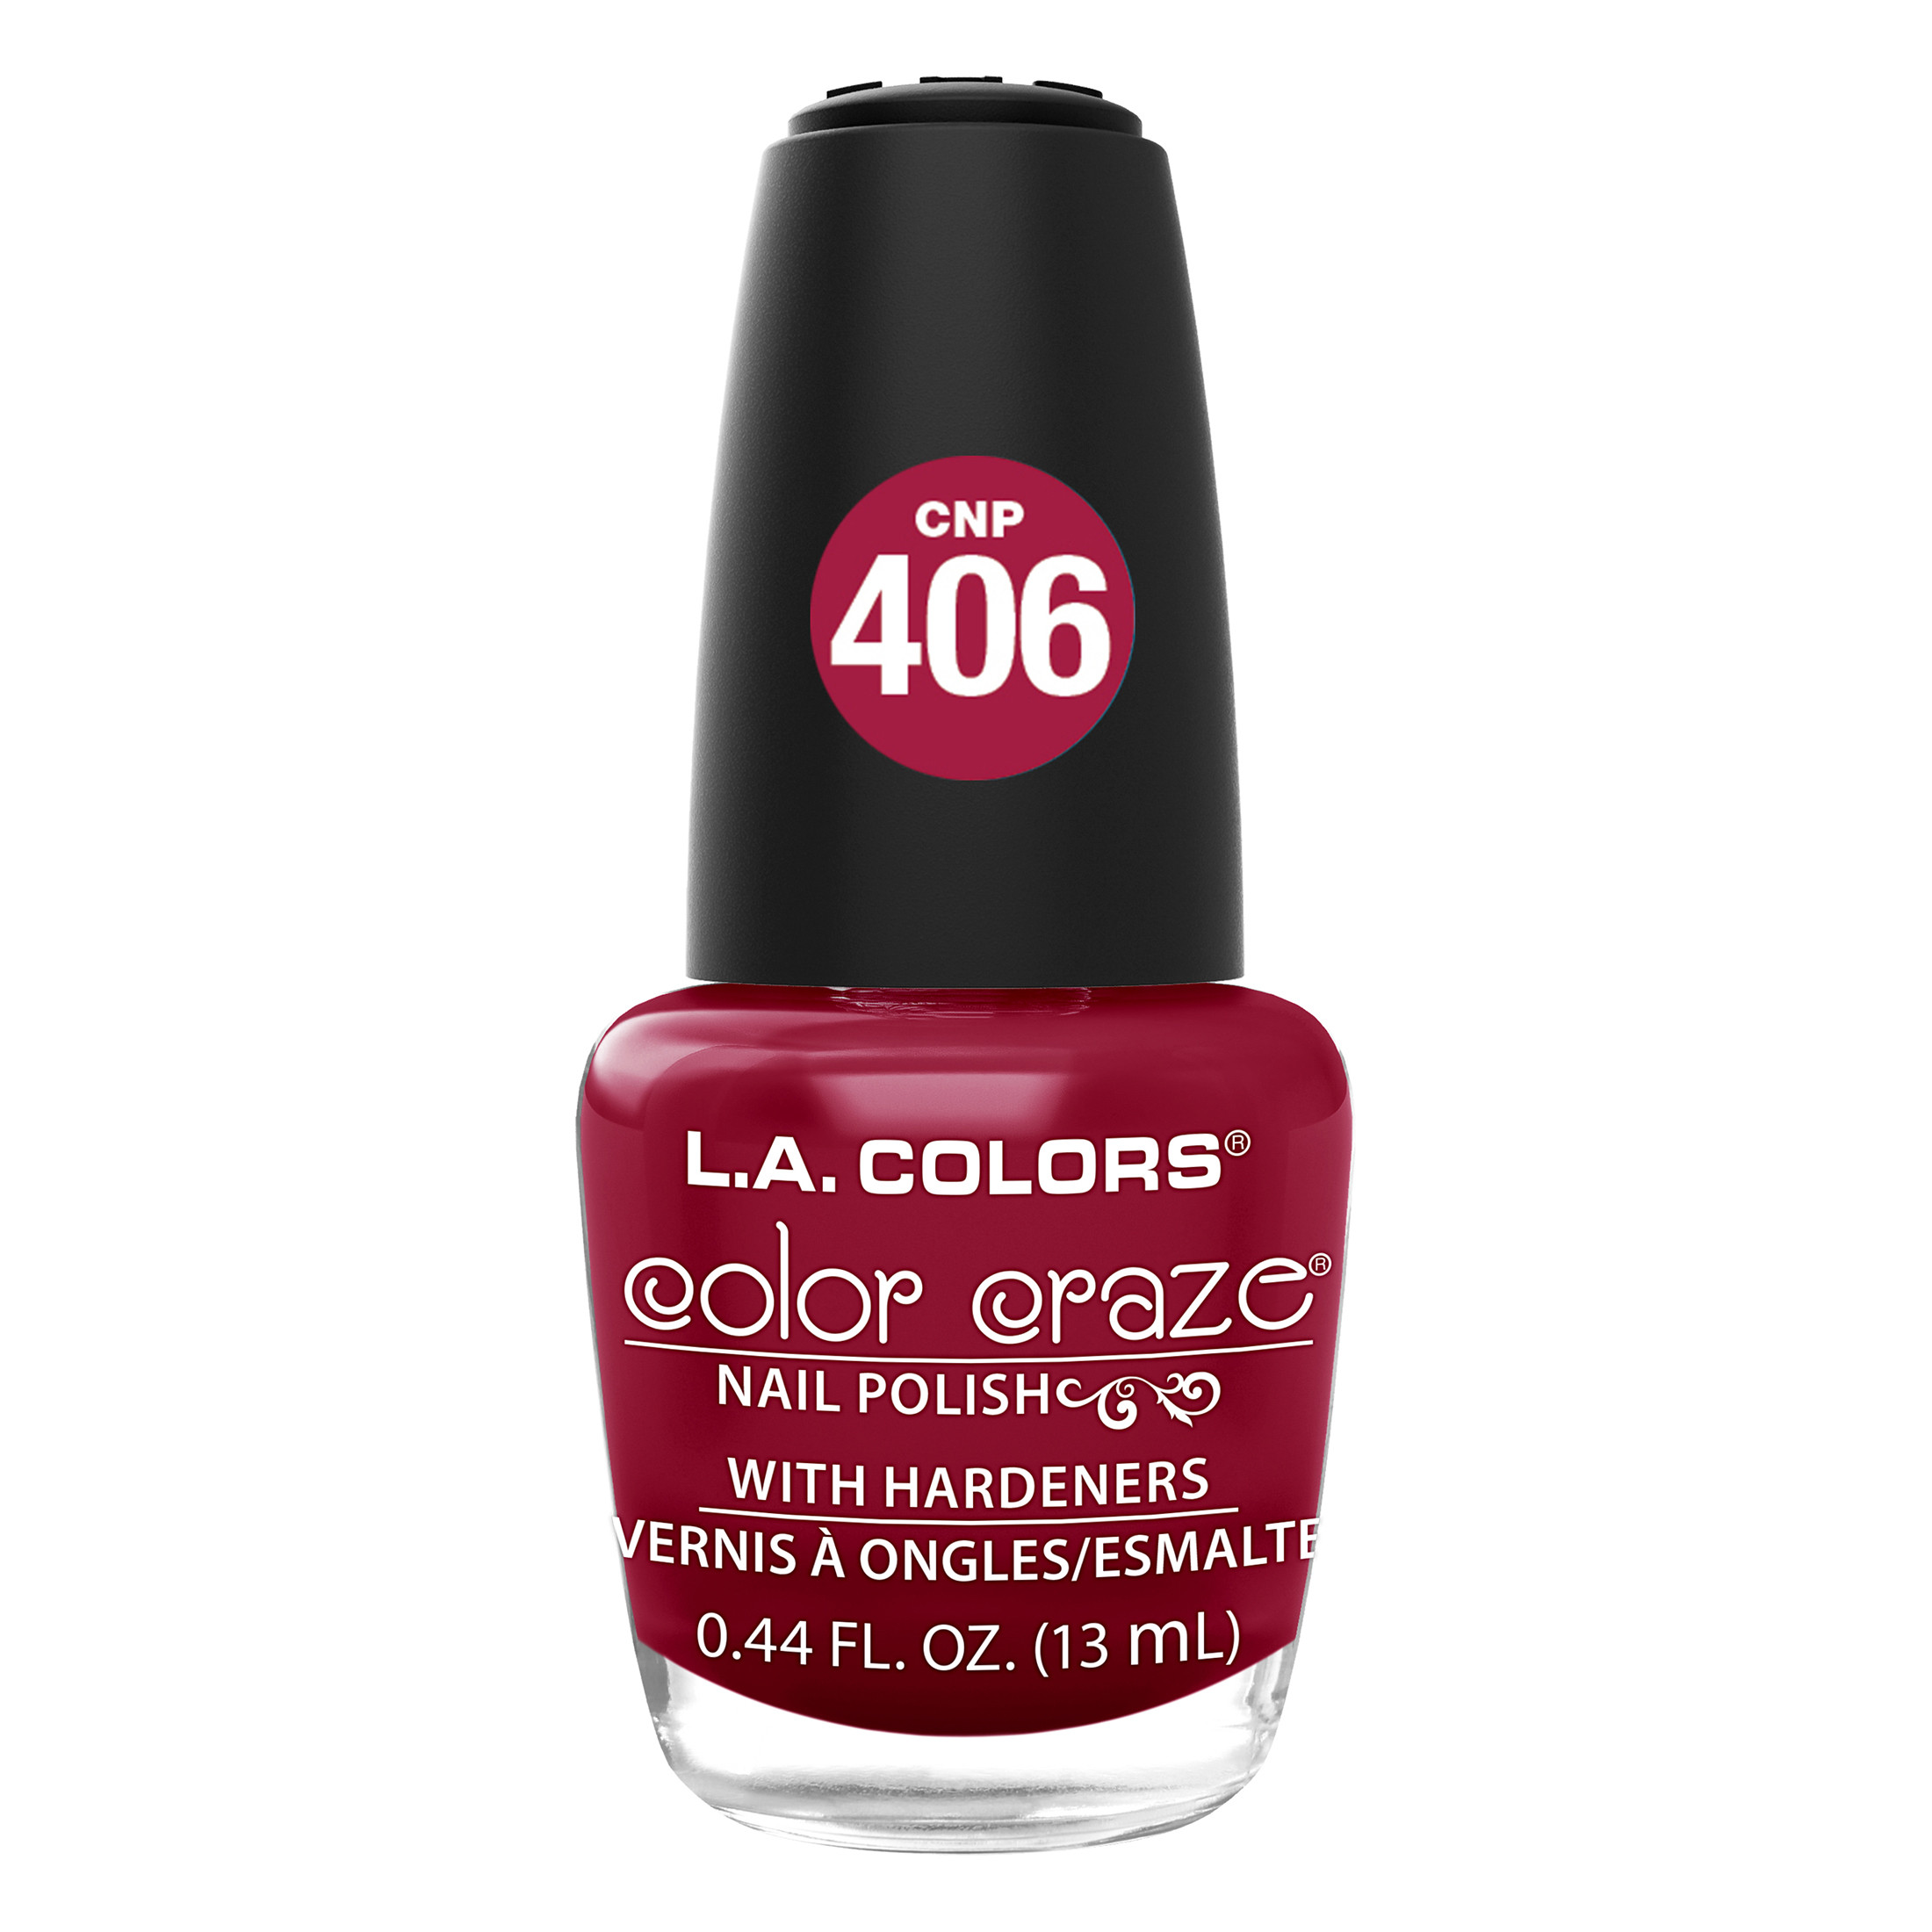 L.A. COLORS Color Craze Nail Polish, Hot Blooded, 0.44 fl oz - image 1 of 8